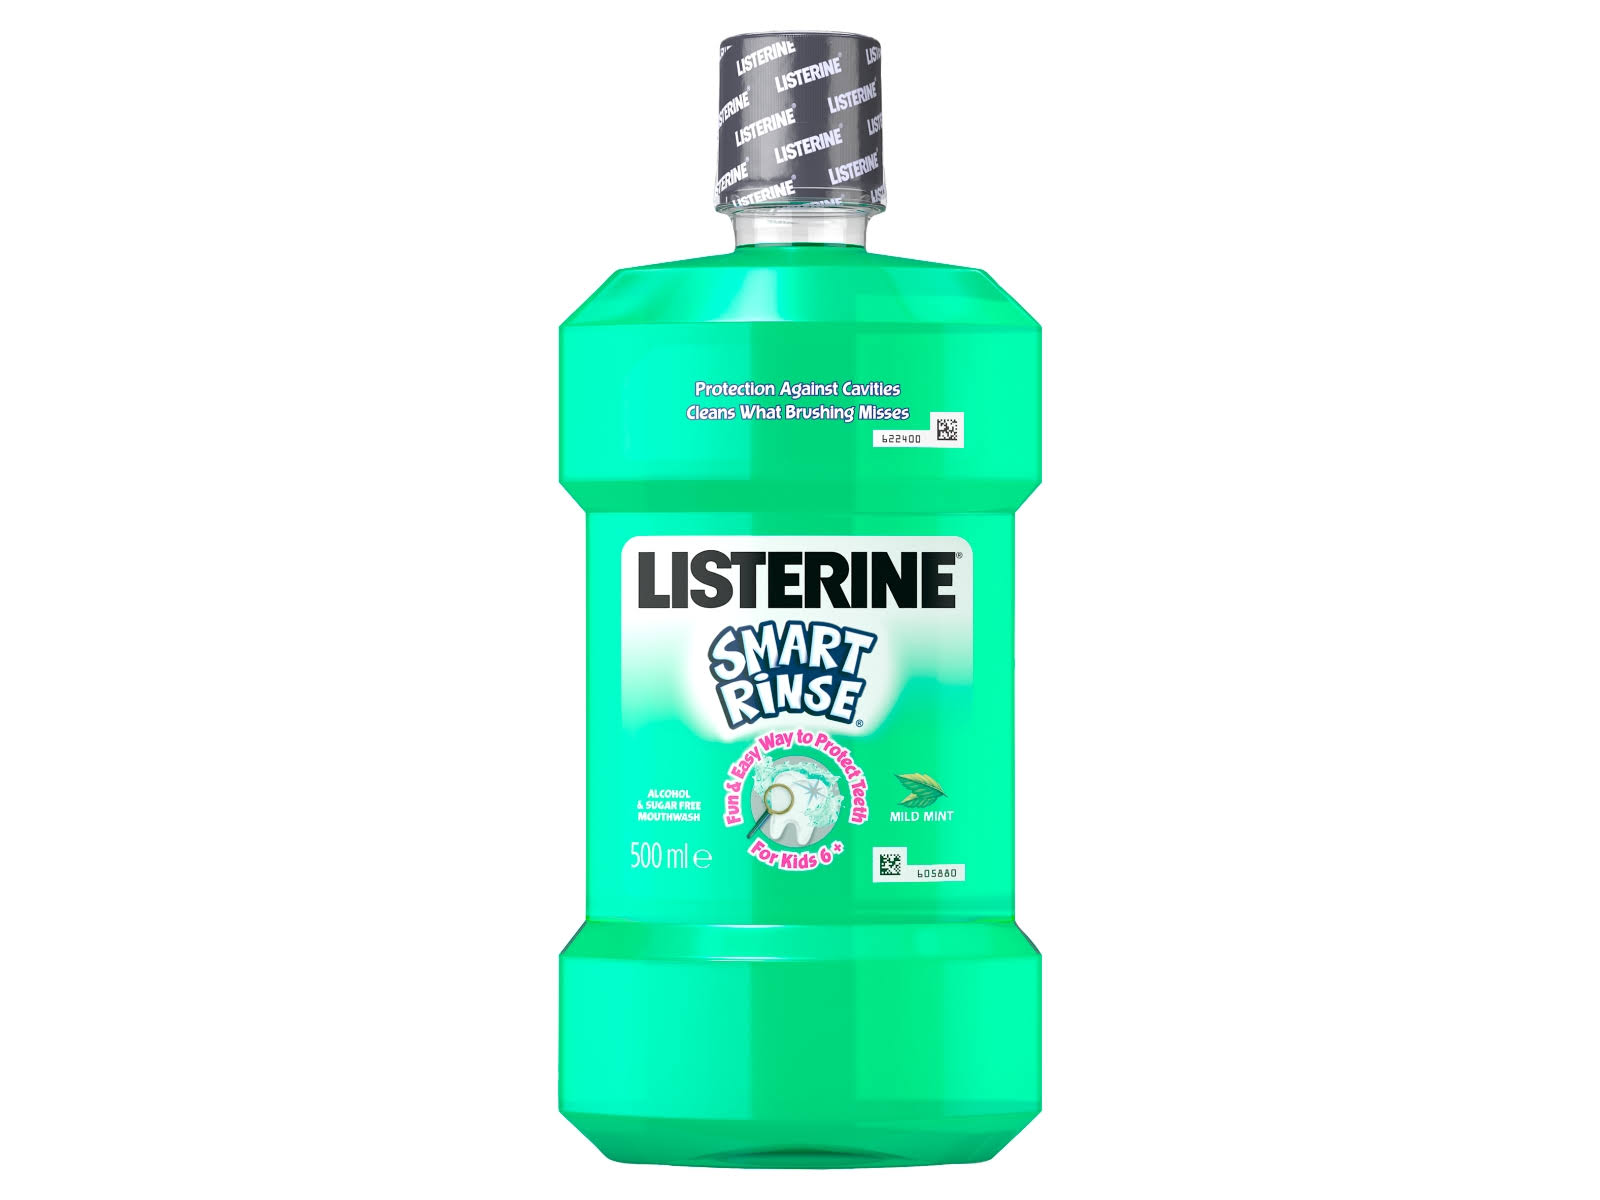 Listerine Smart Rinse Mouthwash - Mild Mint, 500ml